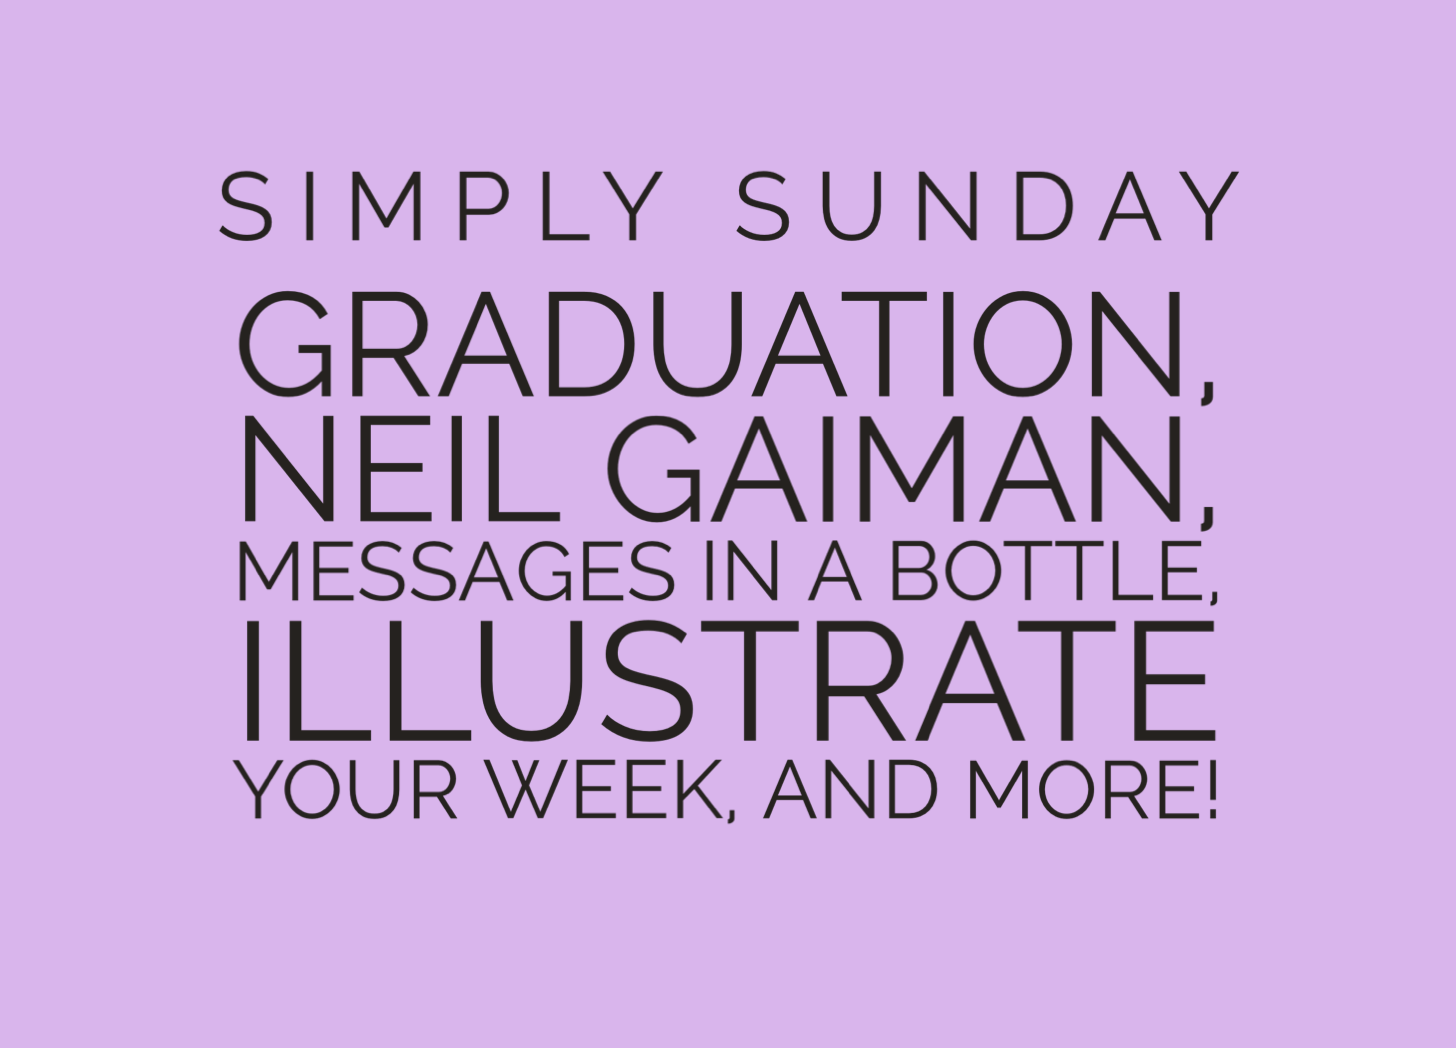 Graduation, Neil Gaiman’s Make Good Art, Messages in a Bottle, and more